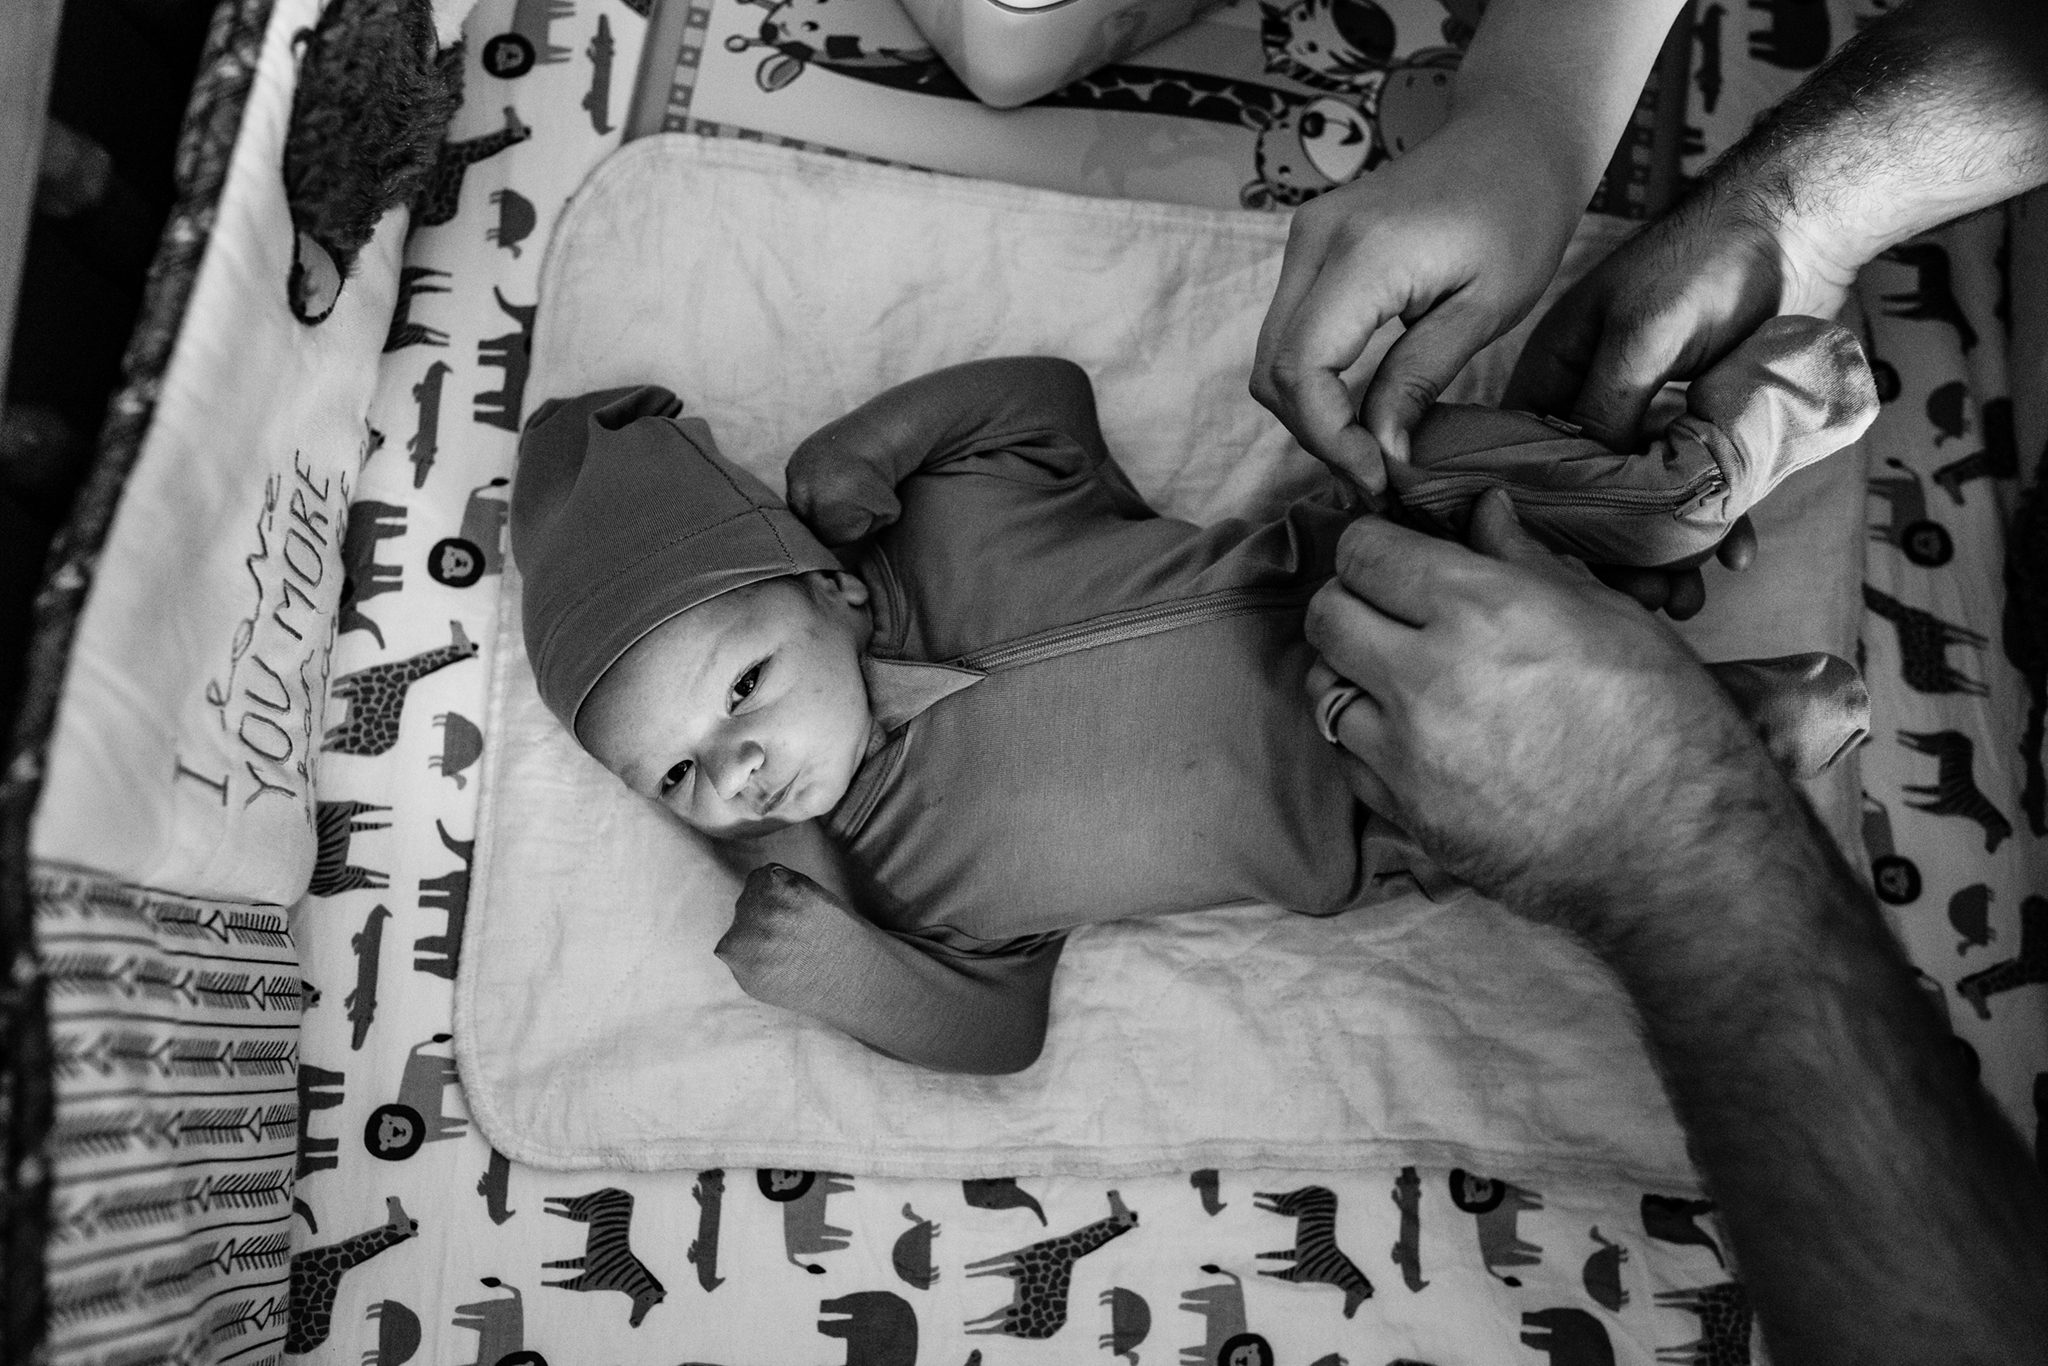 hands reach to fasten snap on baby onesie as newborn boy looks up from crib mat